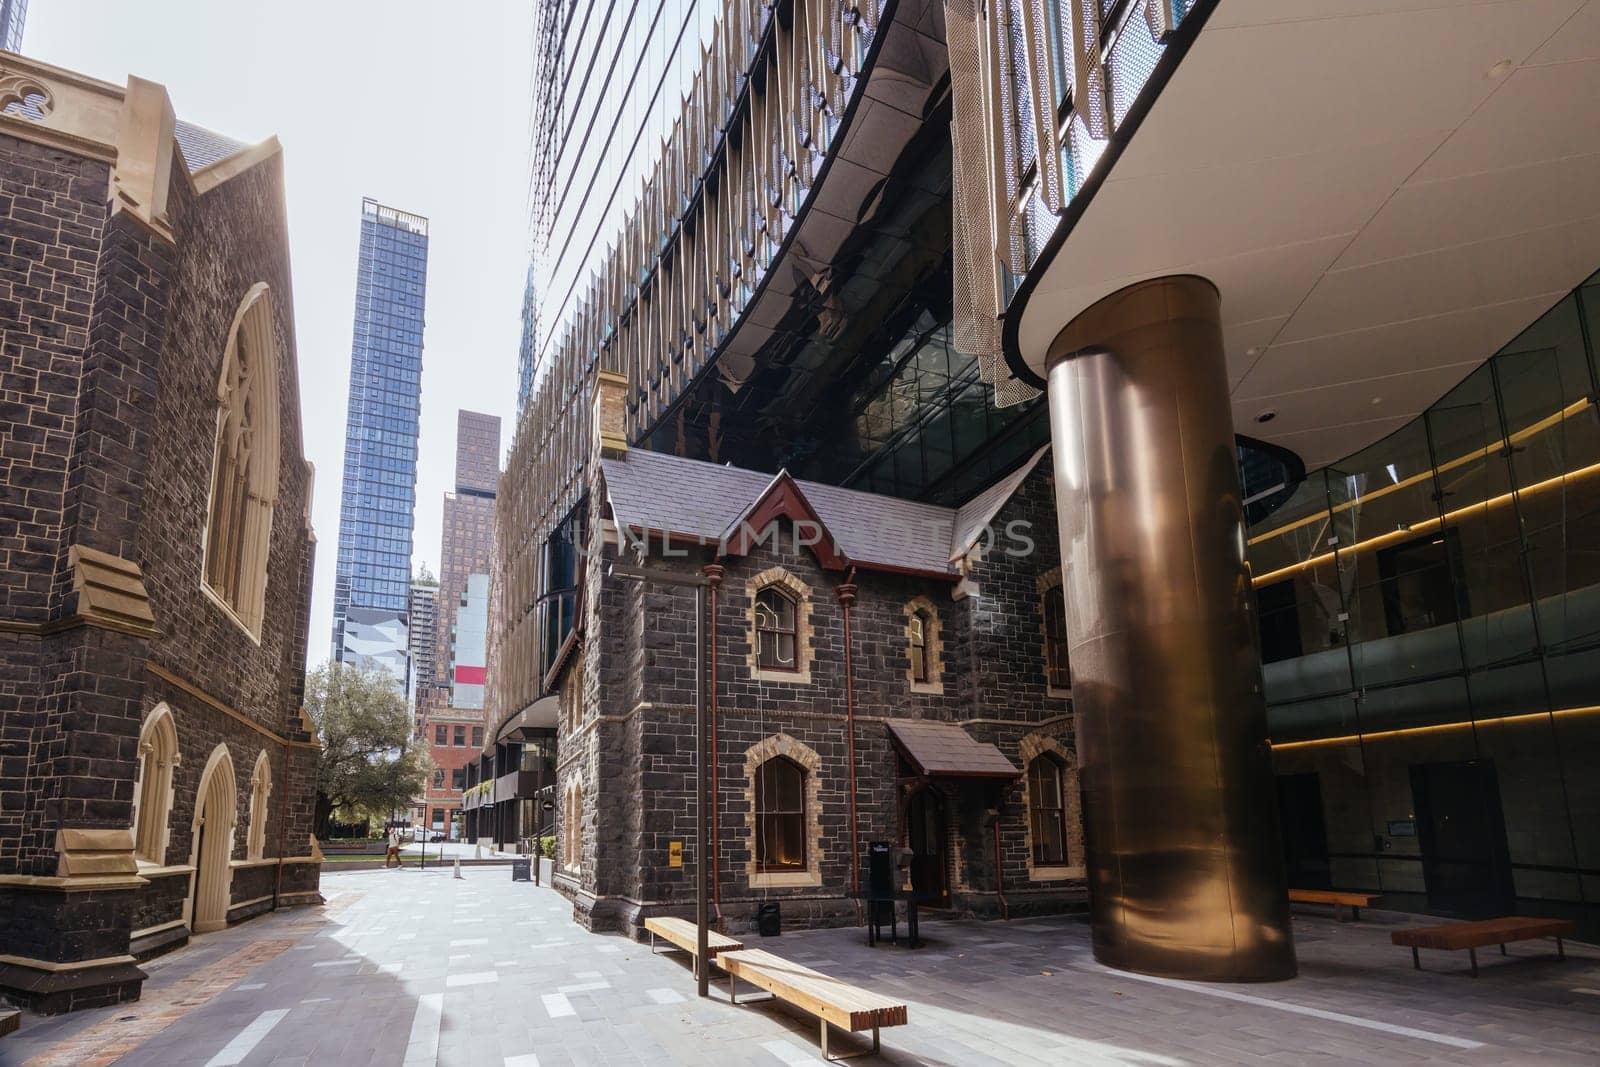 Wesley Place in Melbourne Australia by FiledIMAGE